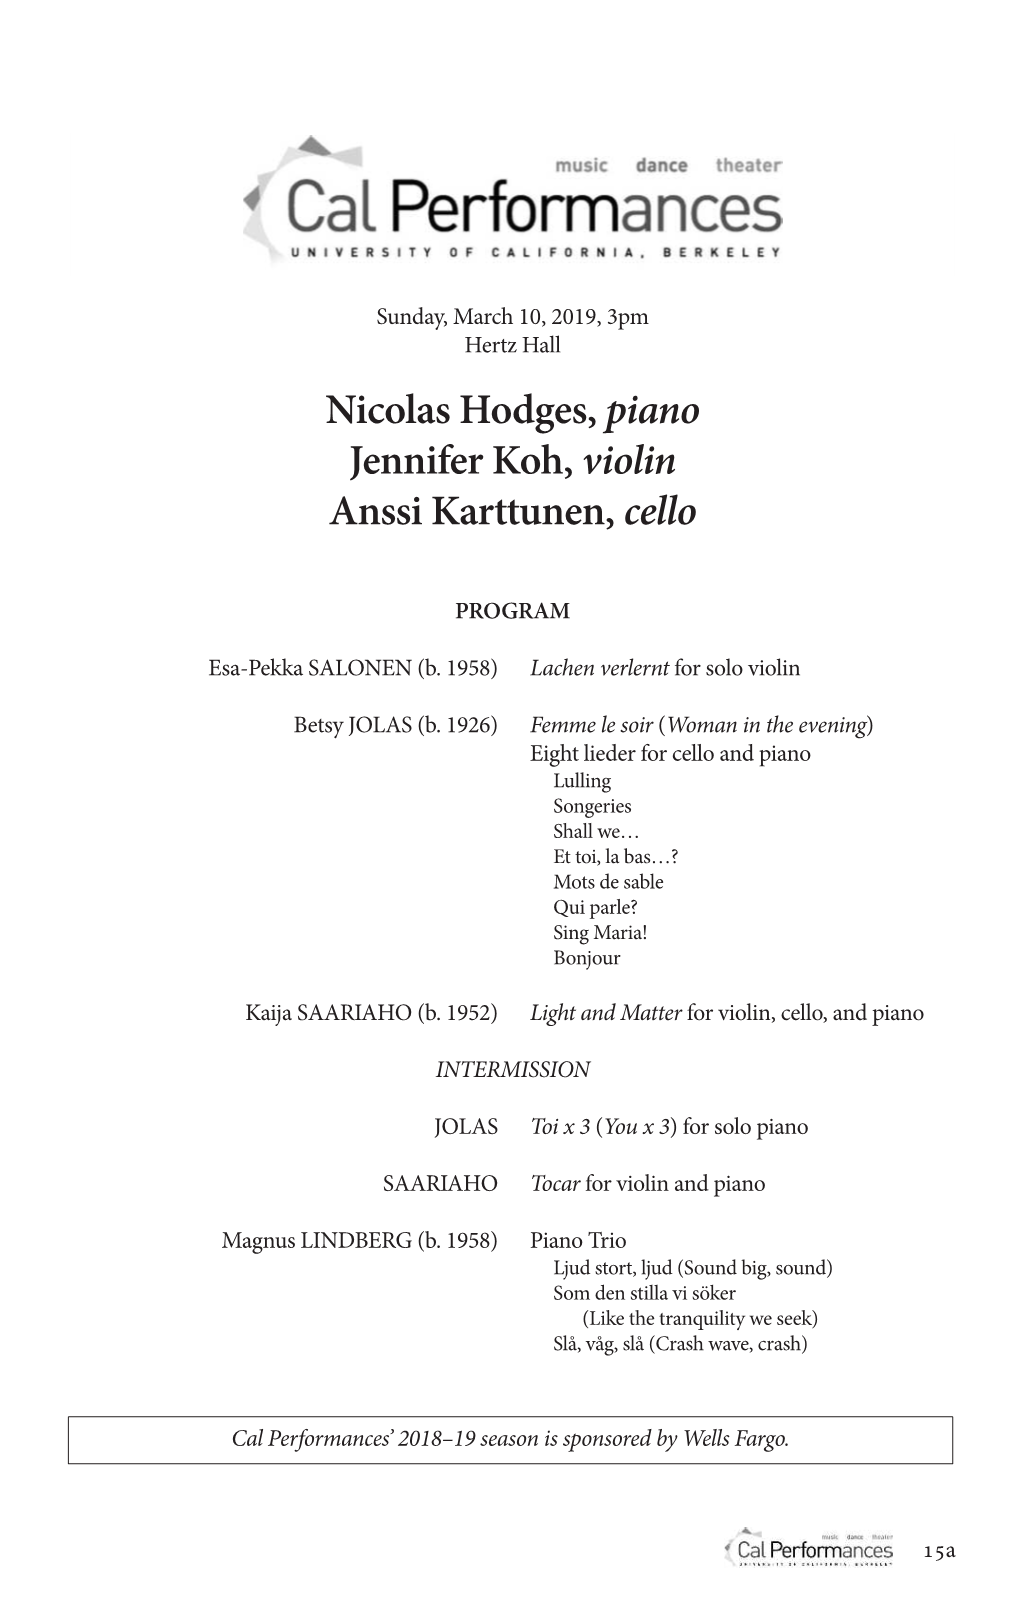 Nicolas Hodges, Piano Jennifer Koh, Violin Anssi Karttunen, Cello